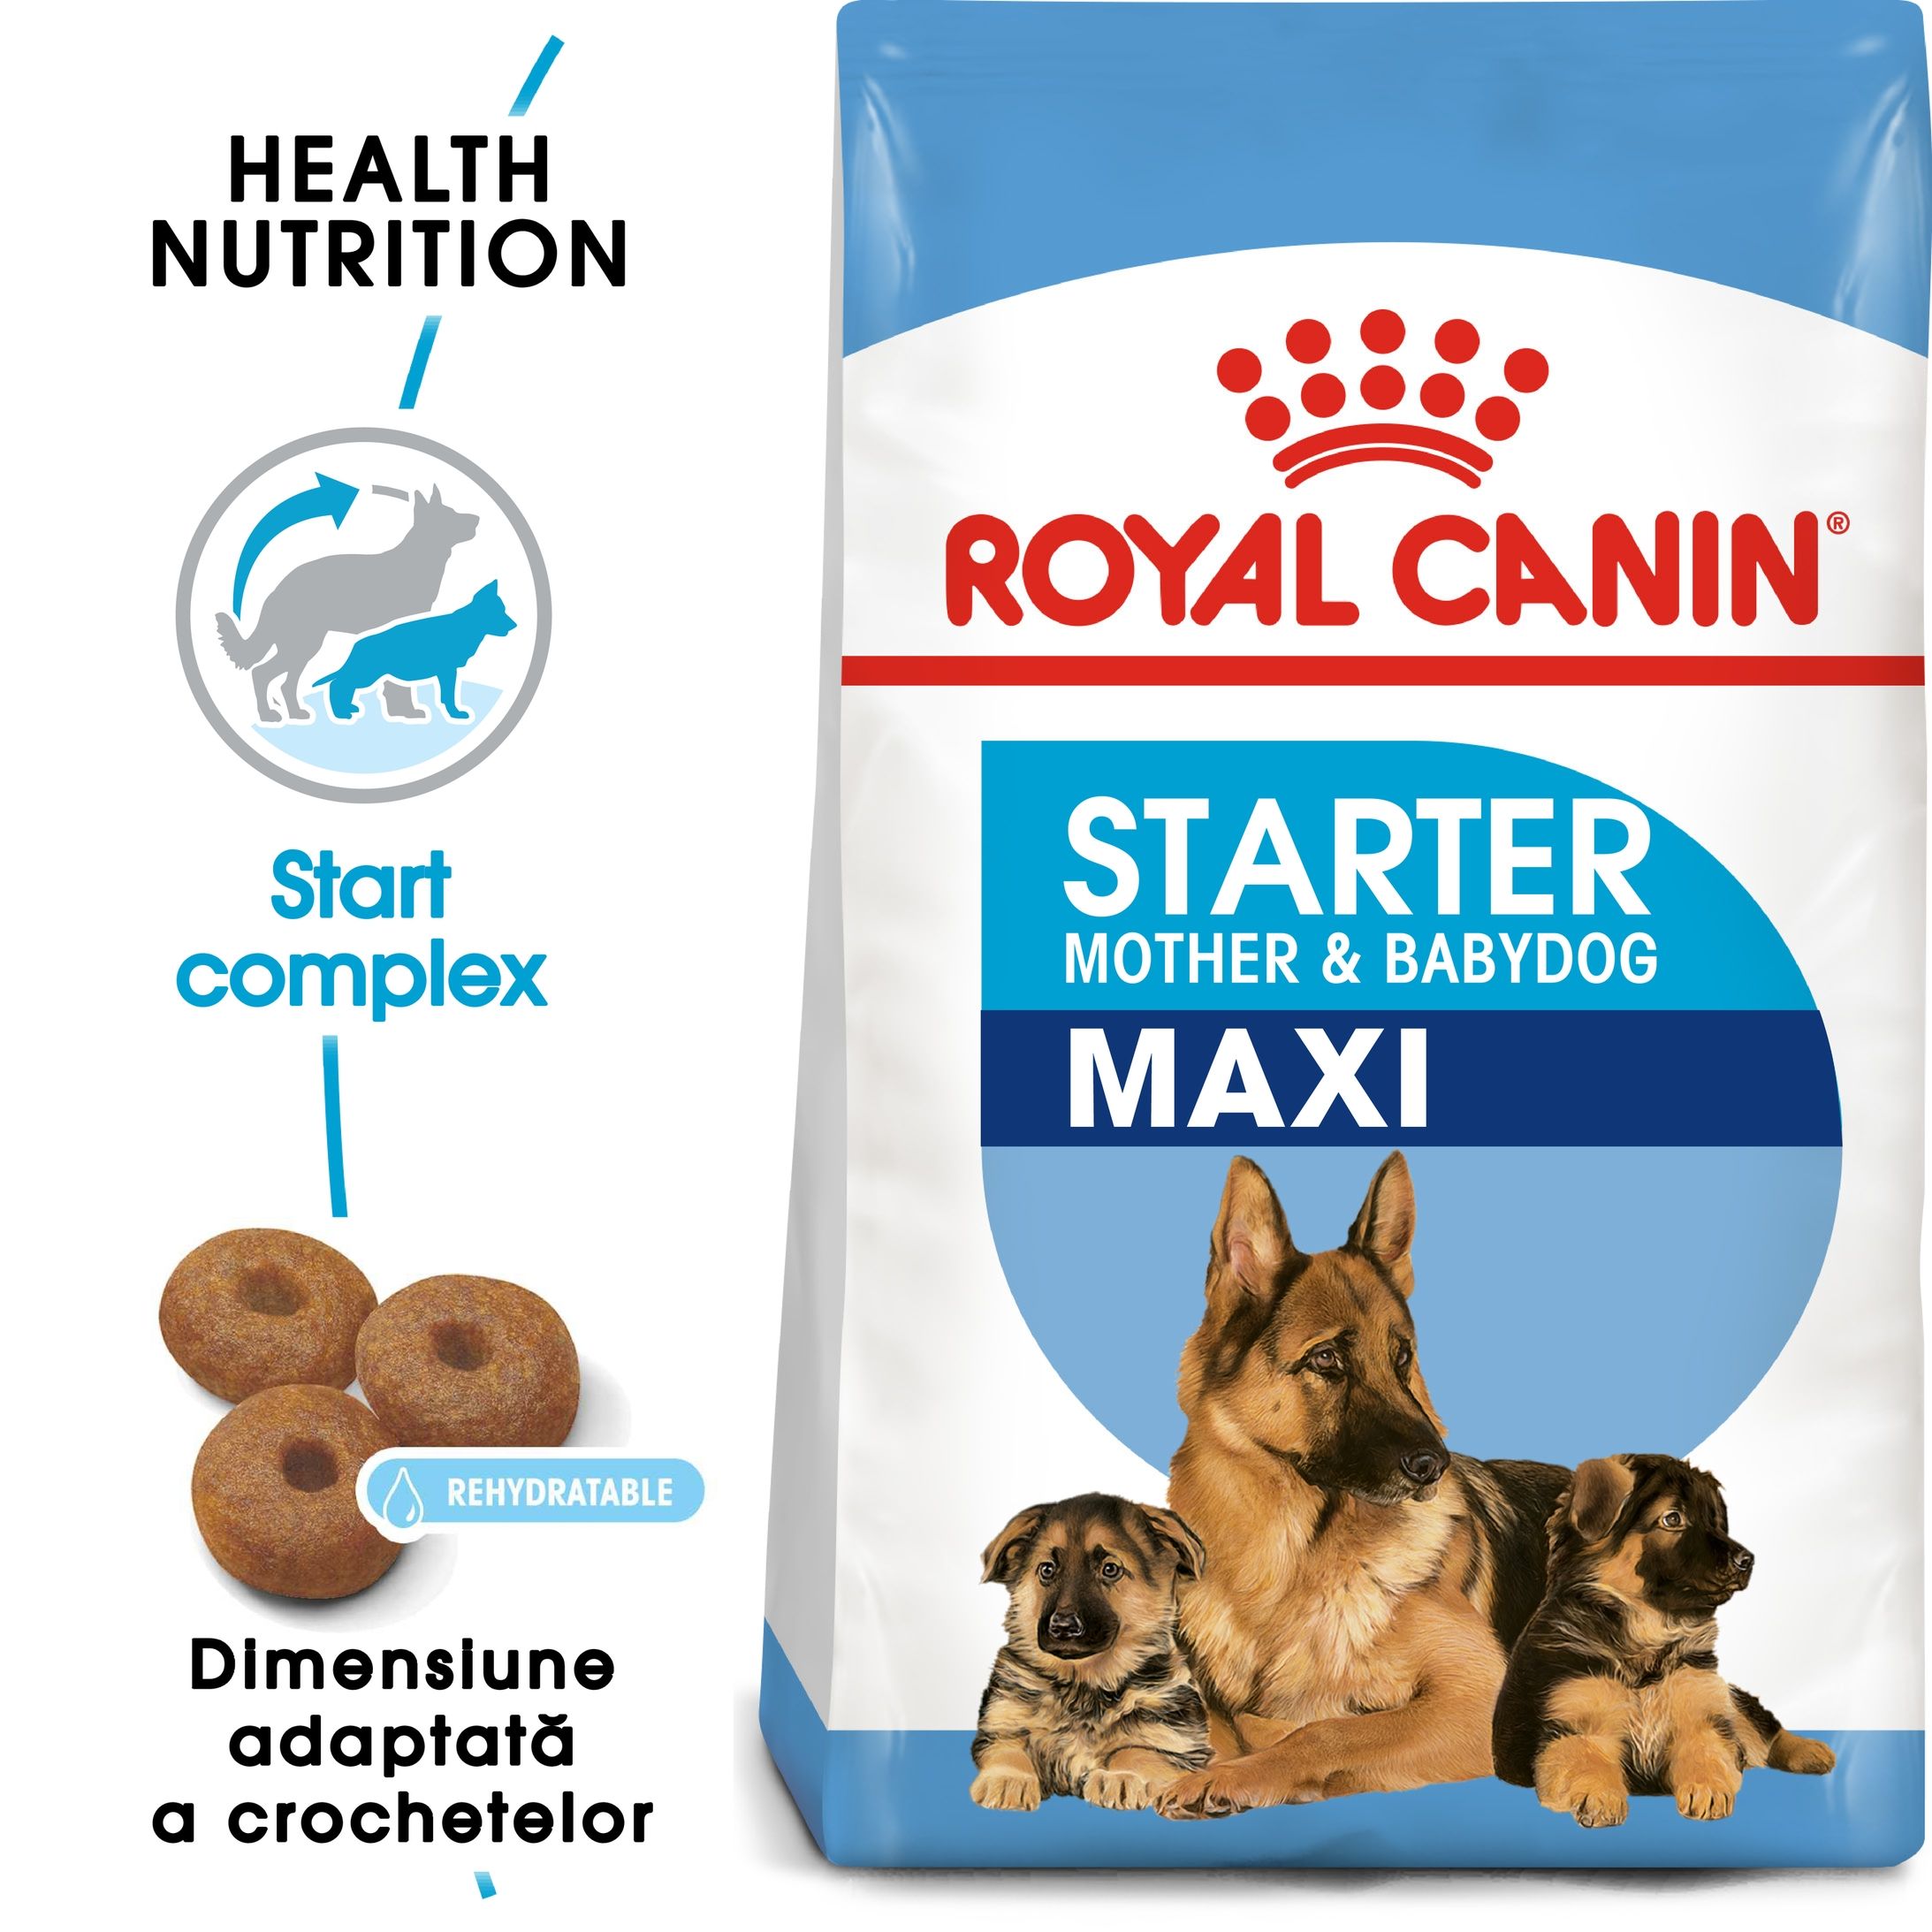 Royal Canin Maxi Starter Mother & Babydog, mama si puiul, hrana uscata caine Babydog